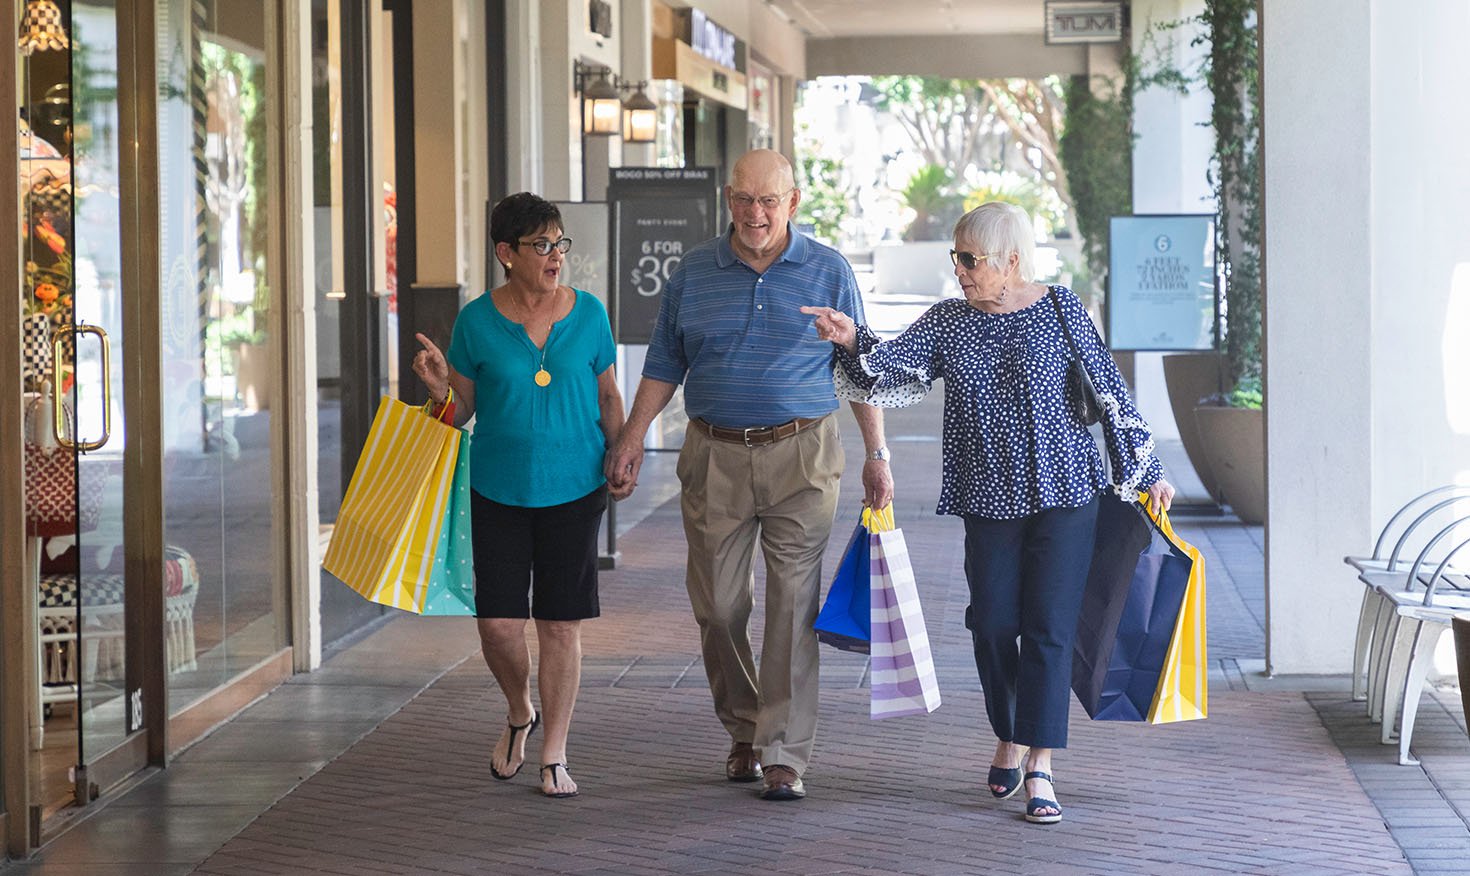 Two senior women and a senior man walking through a shopping area holding shopping bags